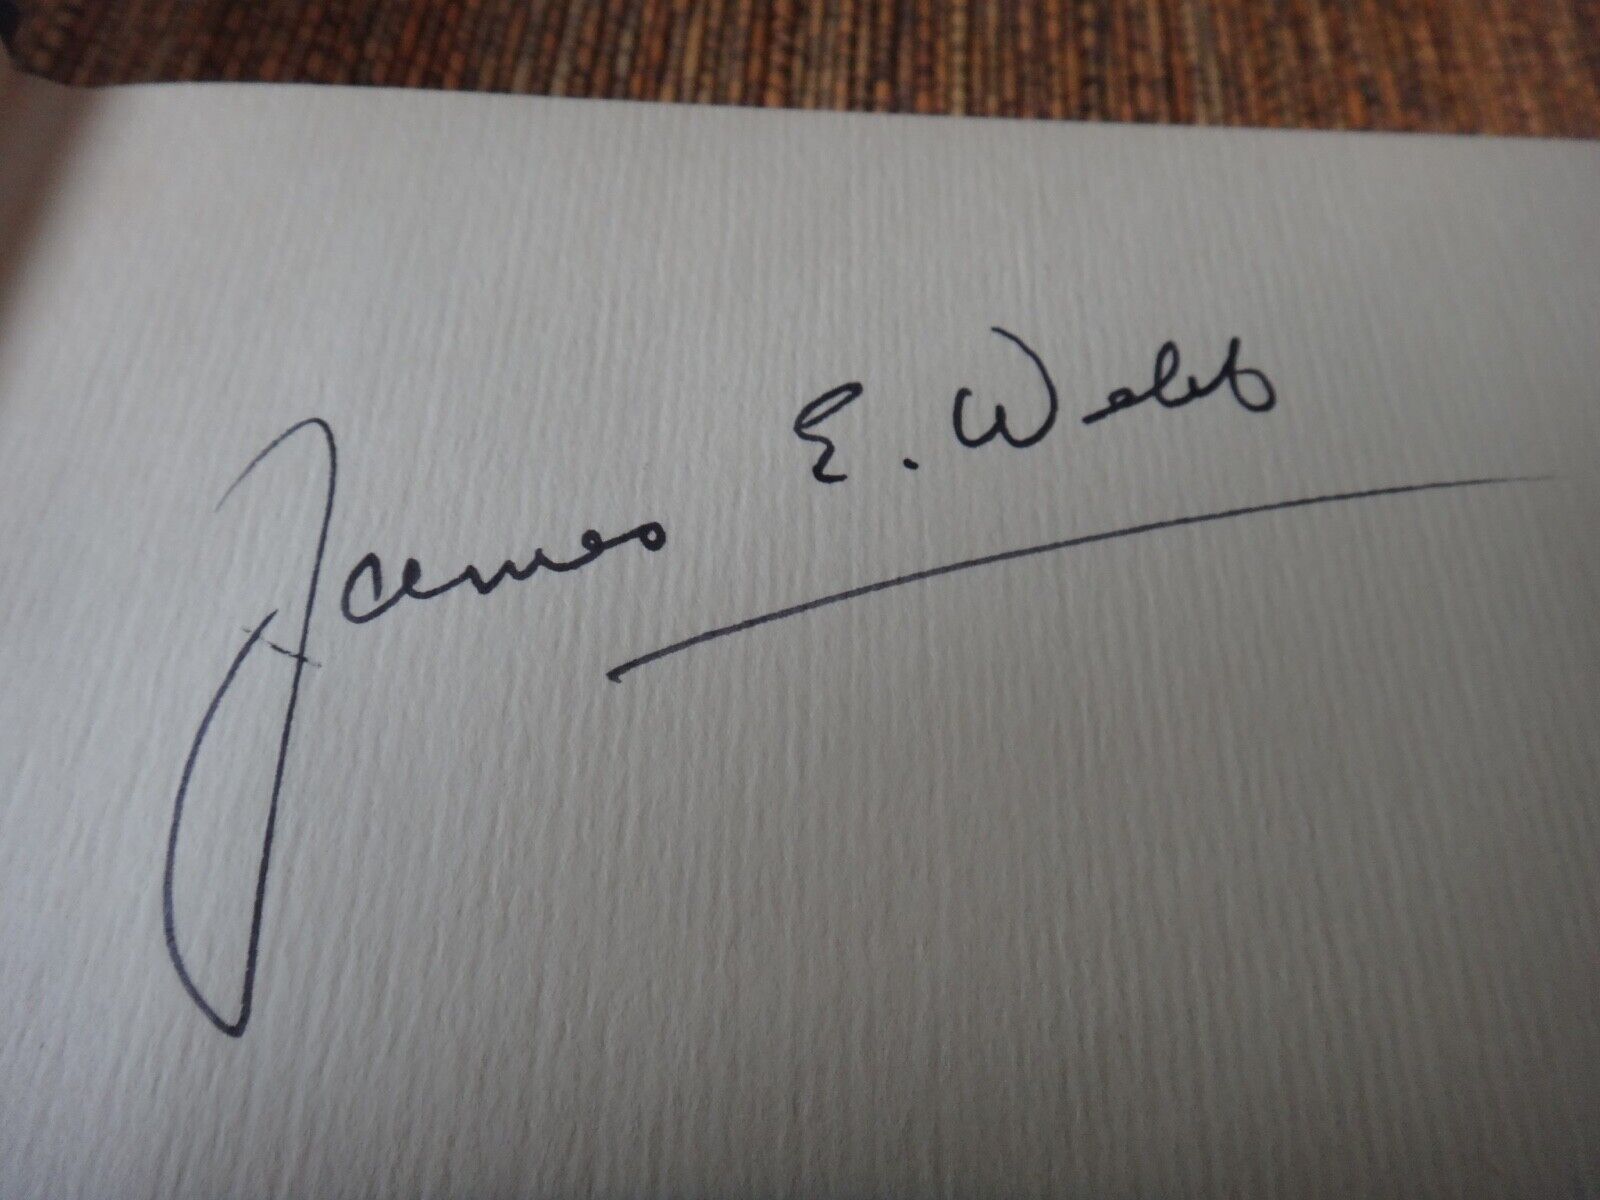 James E. Webb NASA Administrator 1961 - 1968 signature in book